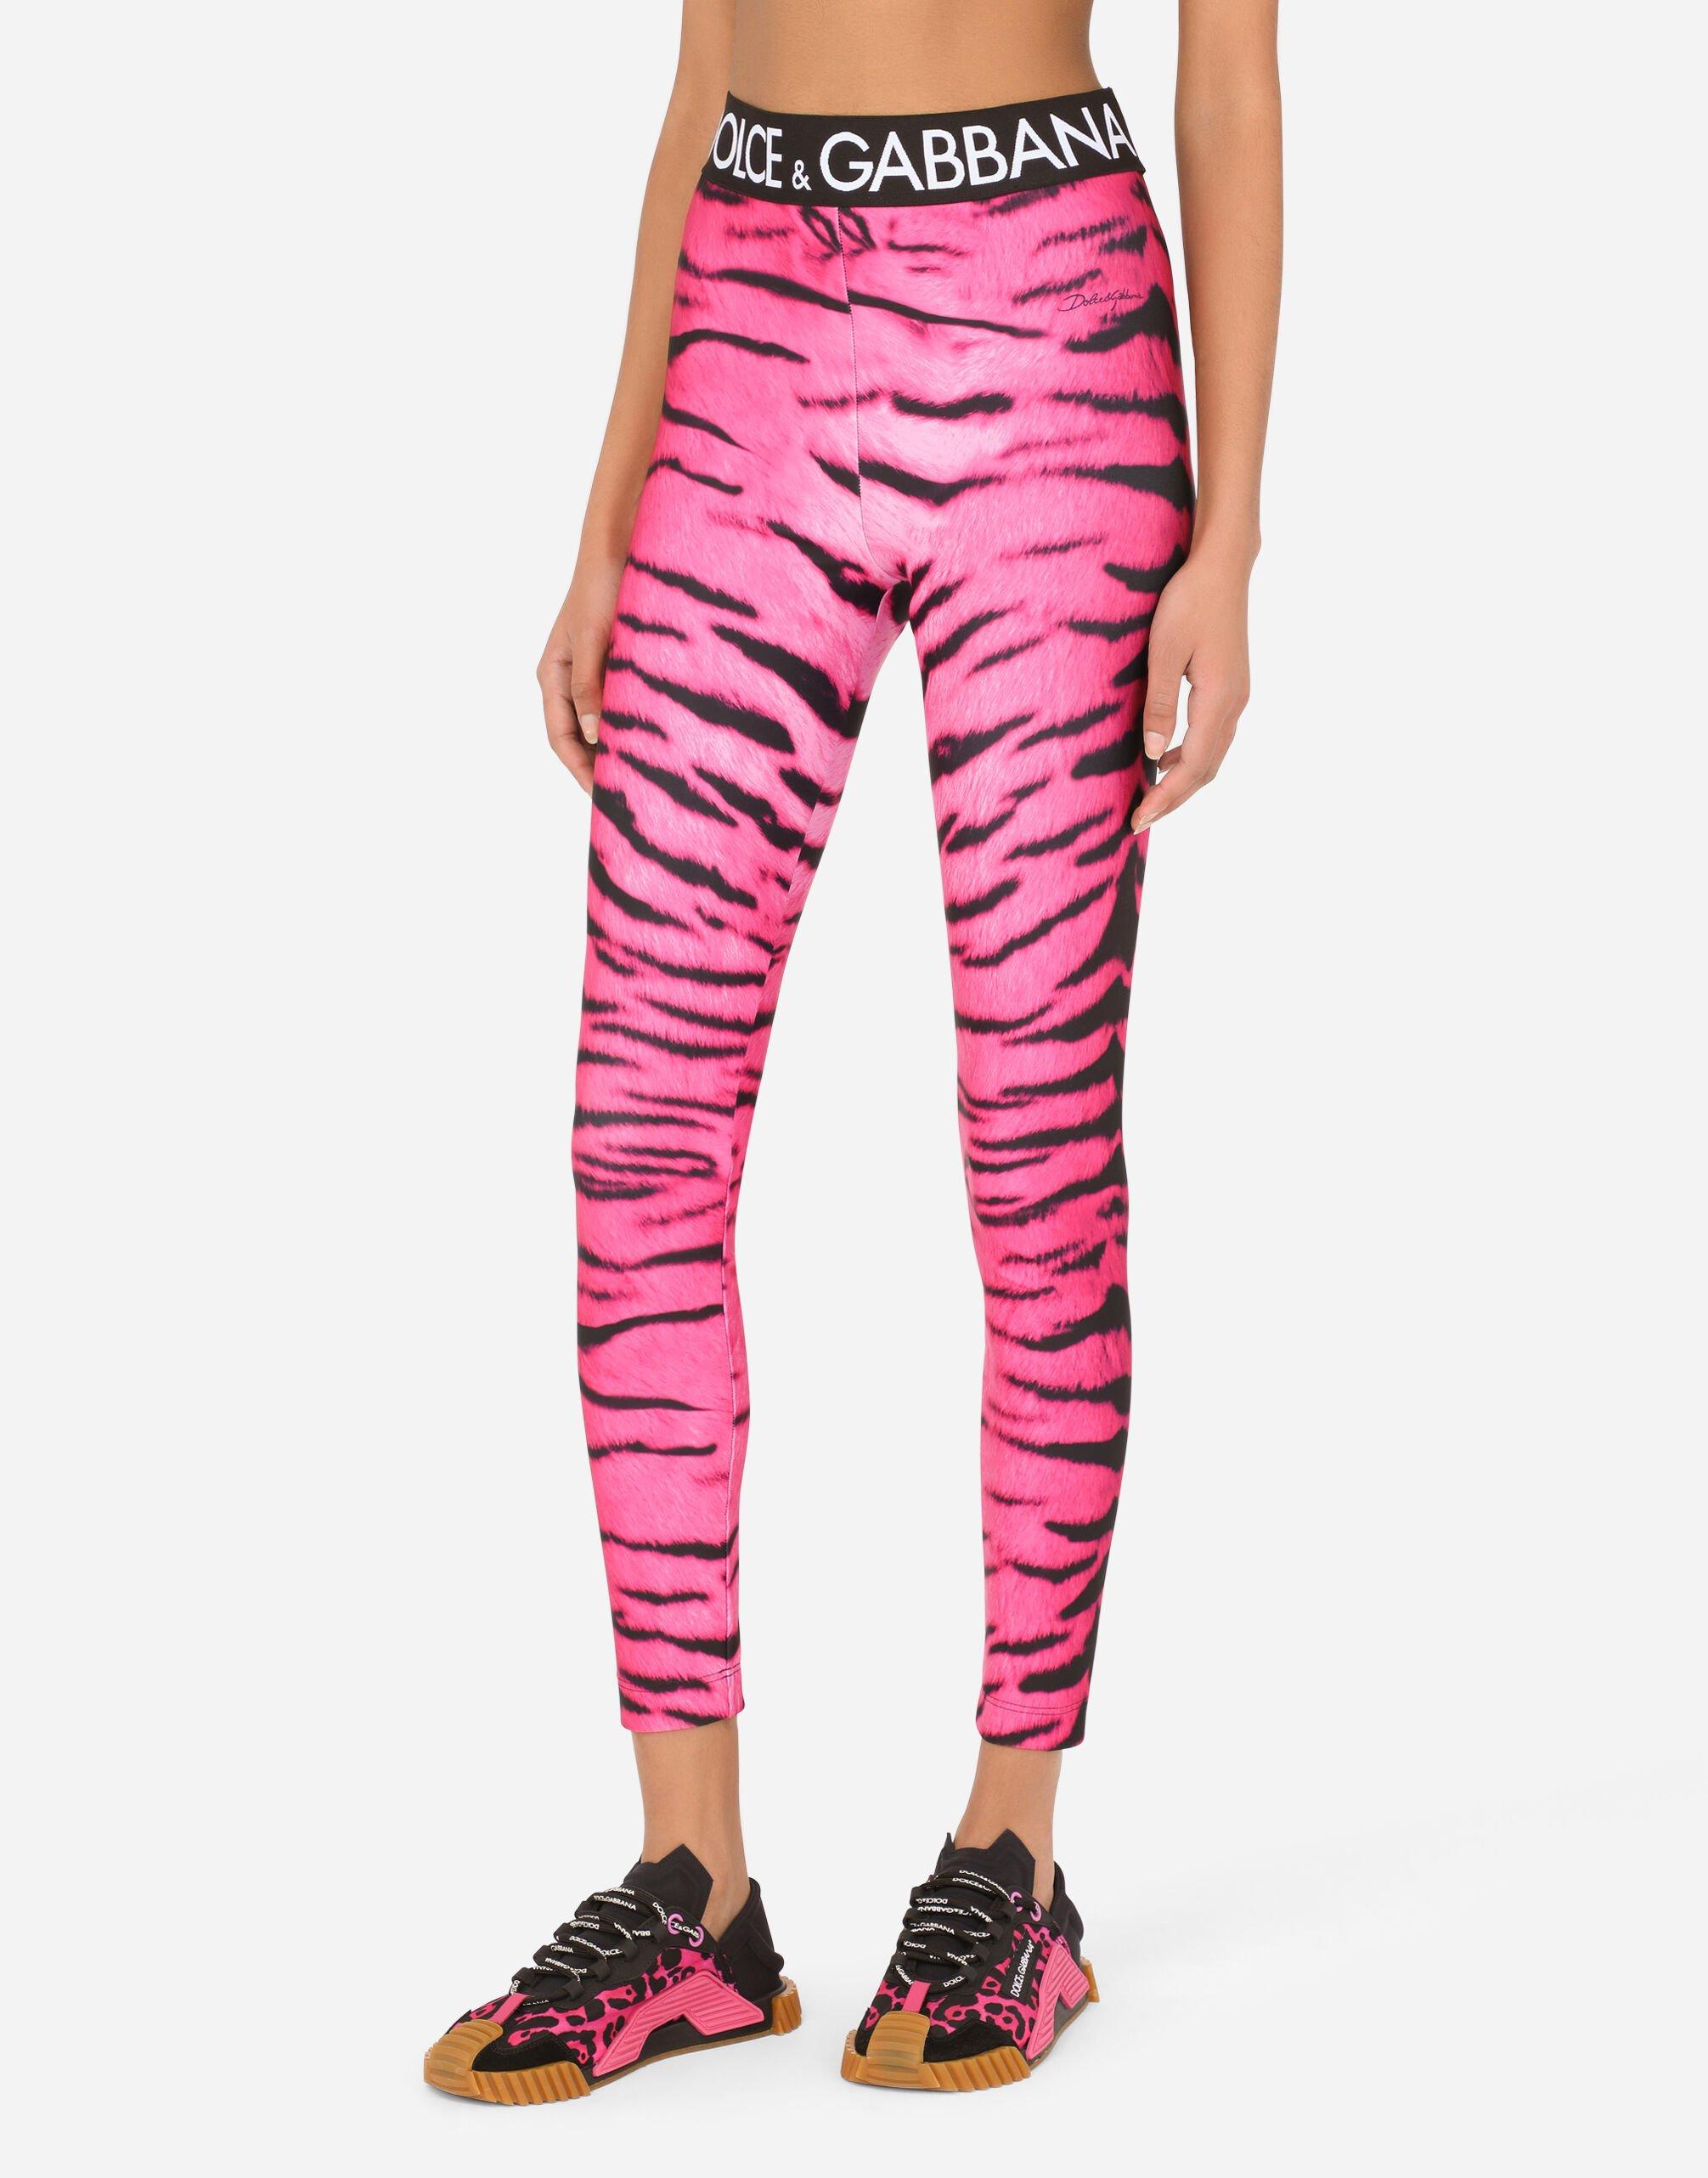 https://cdna.lystit.com/photos/dolcegabbana/4c9979ae/dolce-gabbana-Multicolor-Run-resistant-Fabric-leggings-With-Tiger-Print-And-Branded-Elastic.jpeg